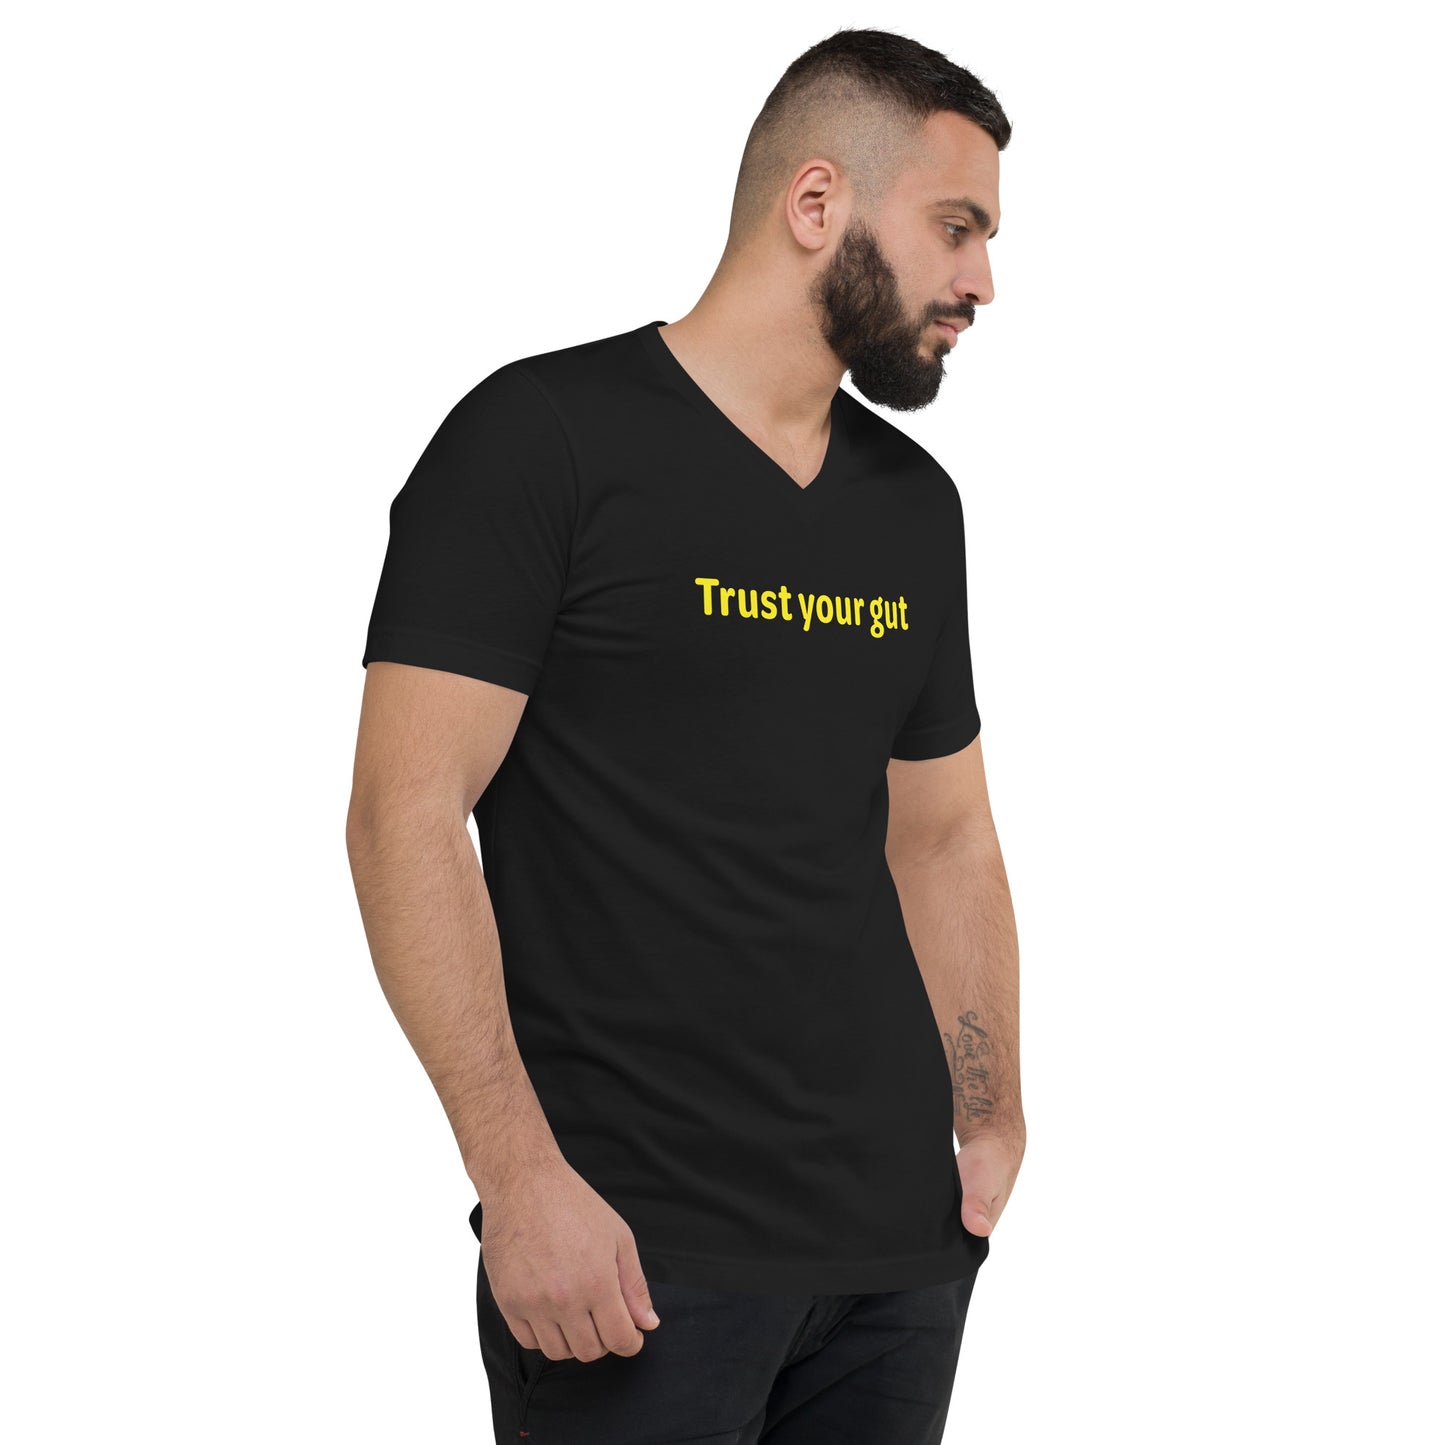 Trust your gut - Yellow Text - Mens V-Neck T-Shirt